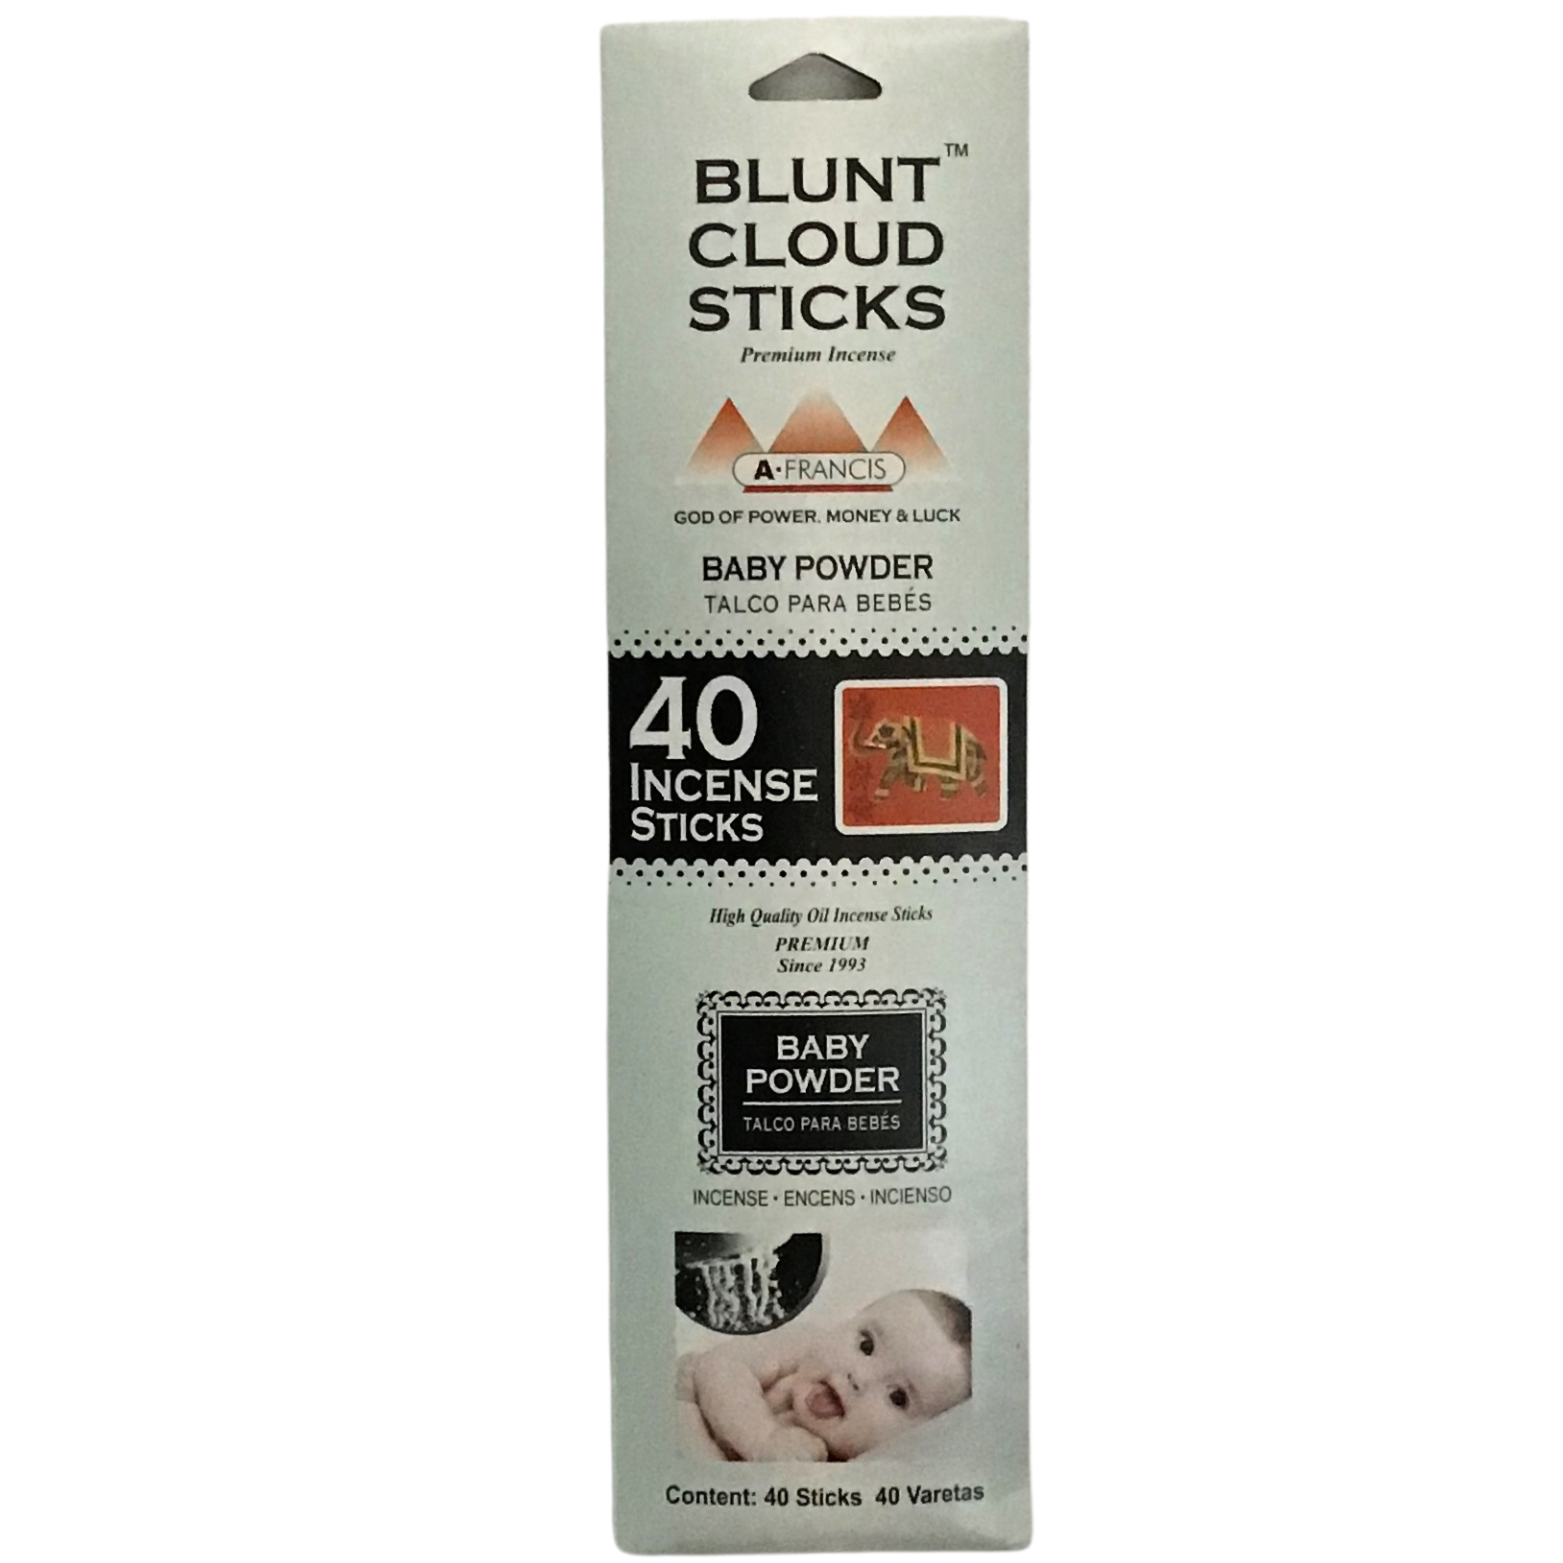 Blunt Cloud Baby Powder 11 Inch Incense Sticks